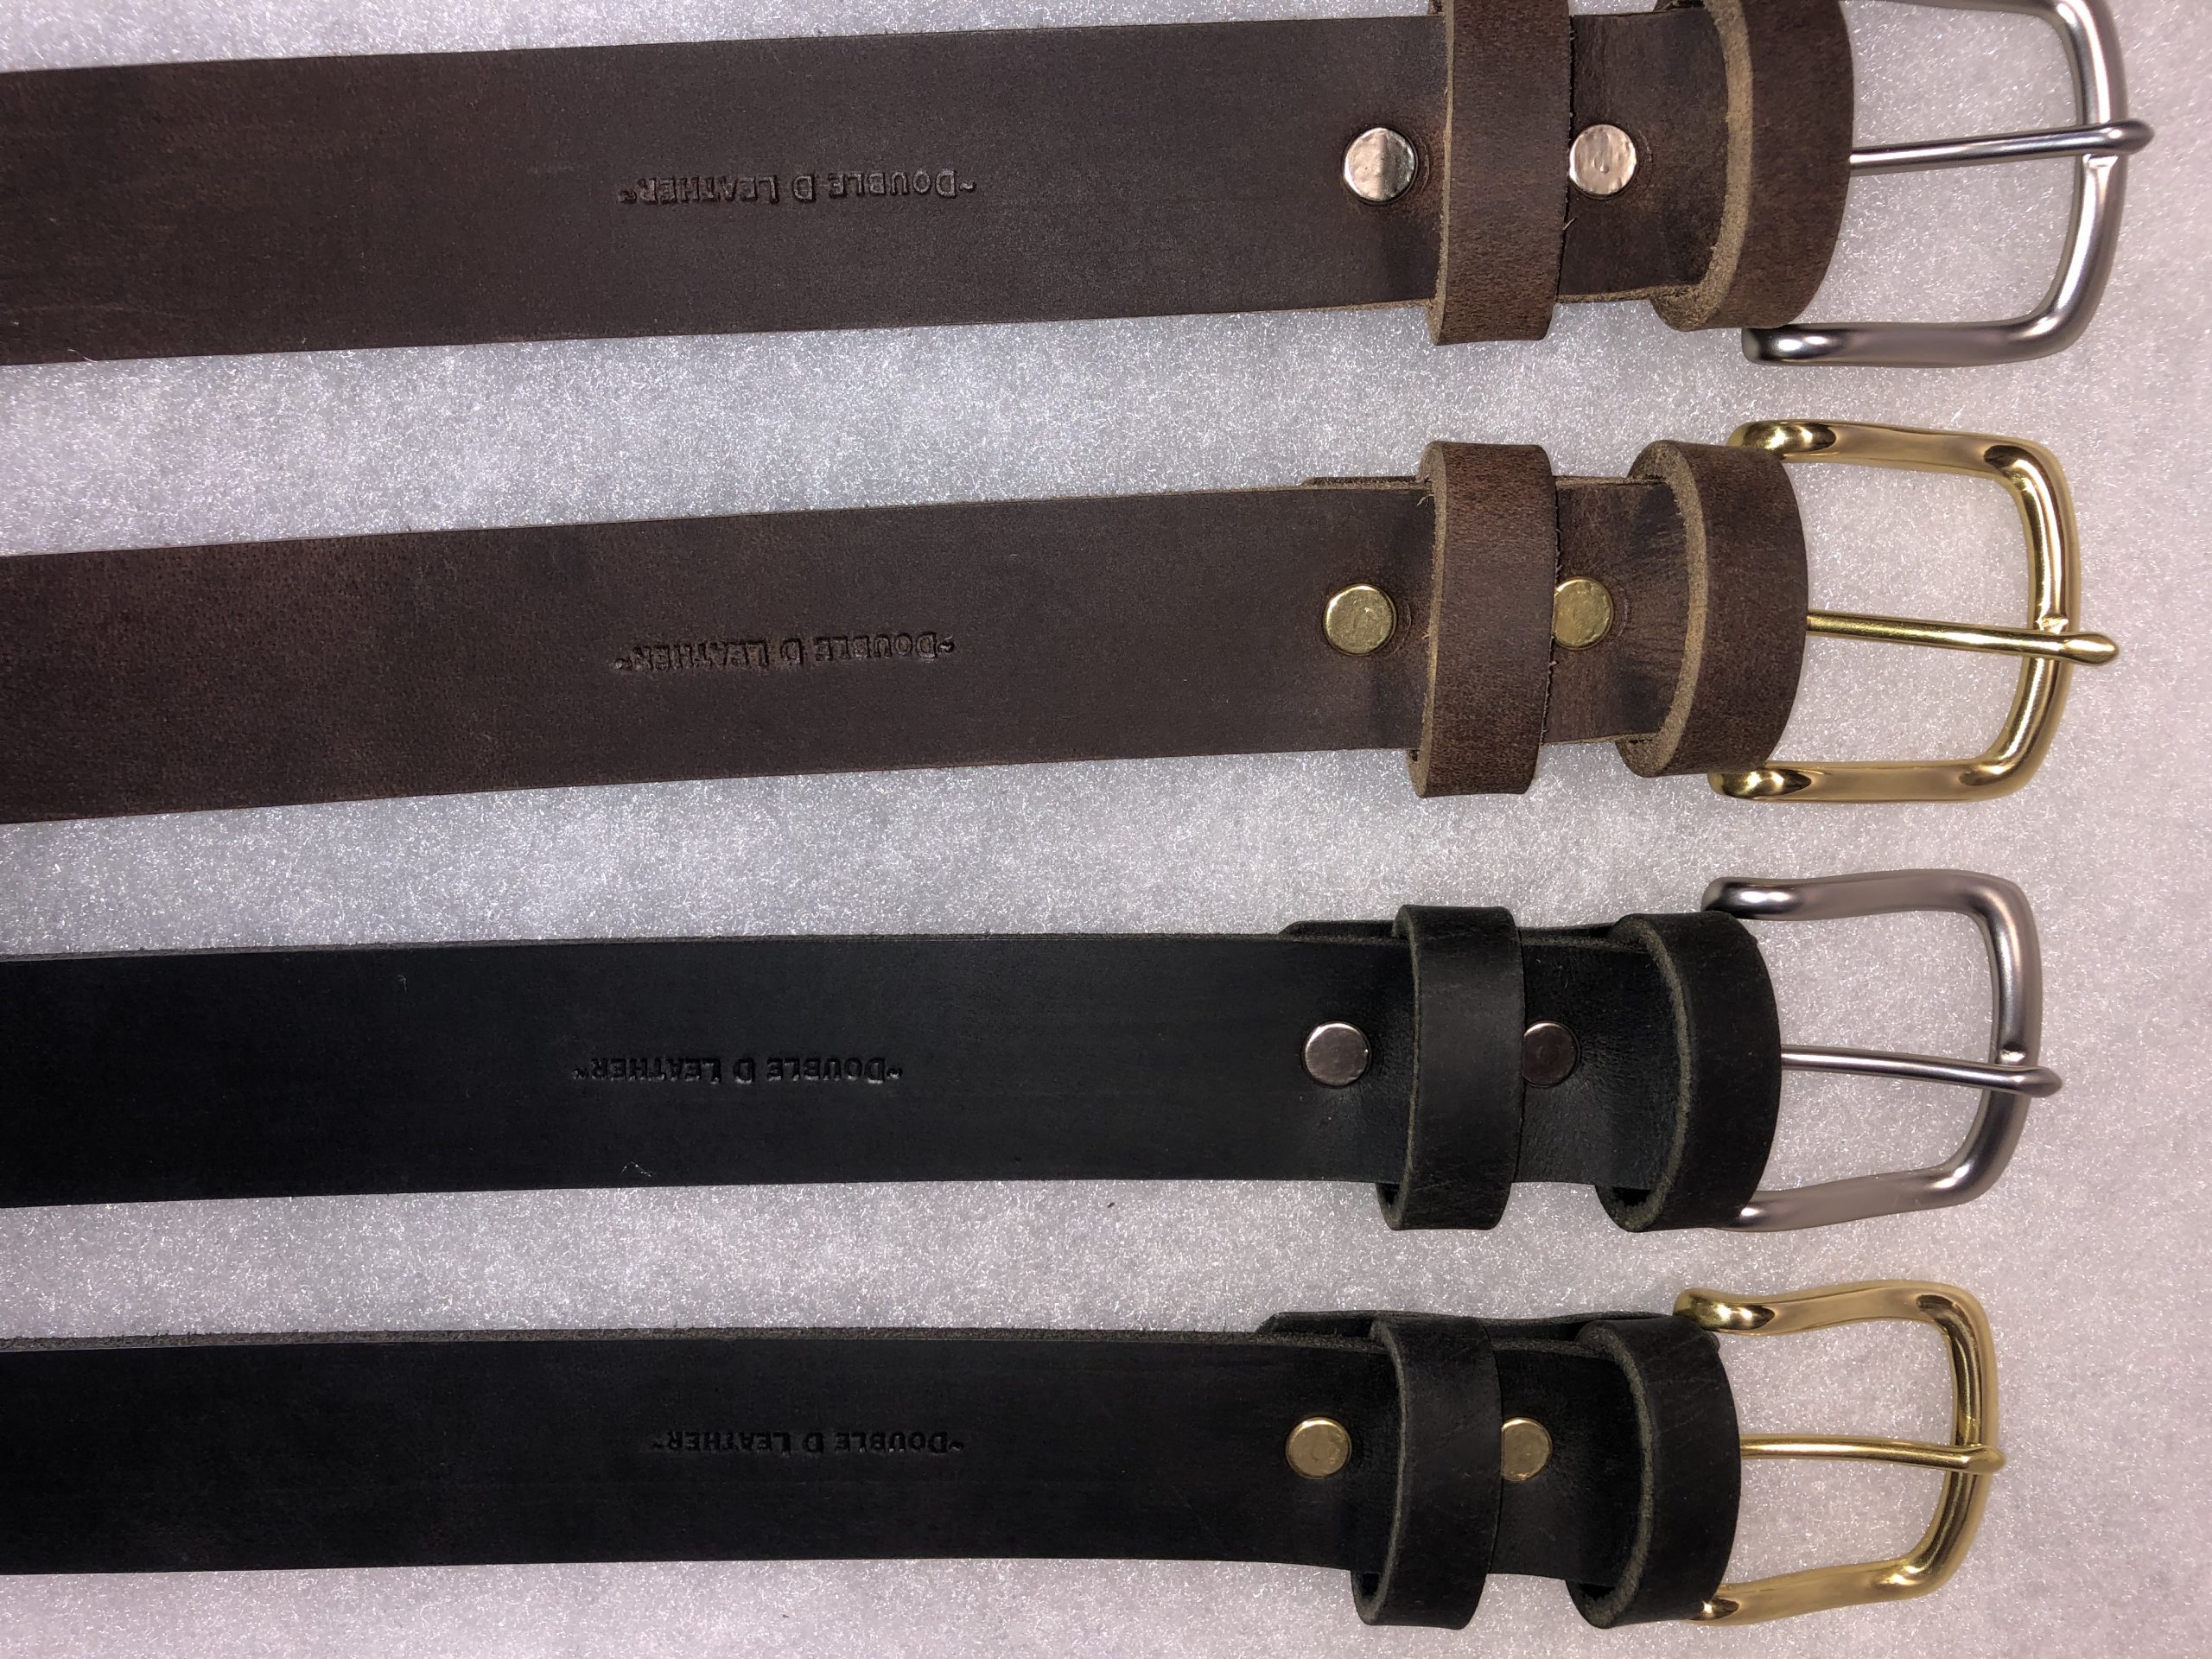 Handmade, Full Grain Leather Belts & Accessories